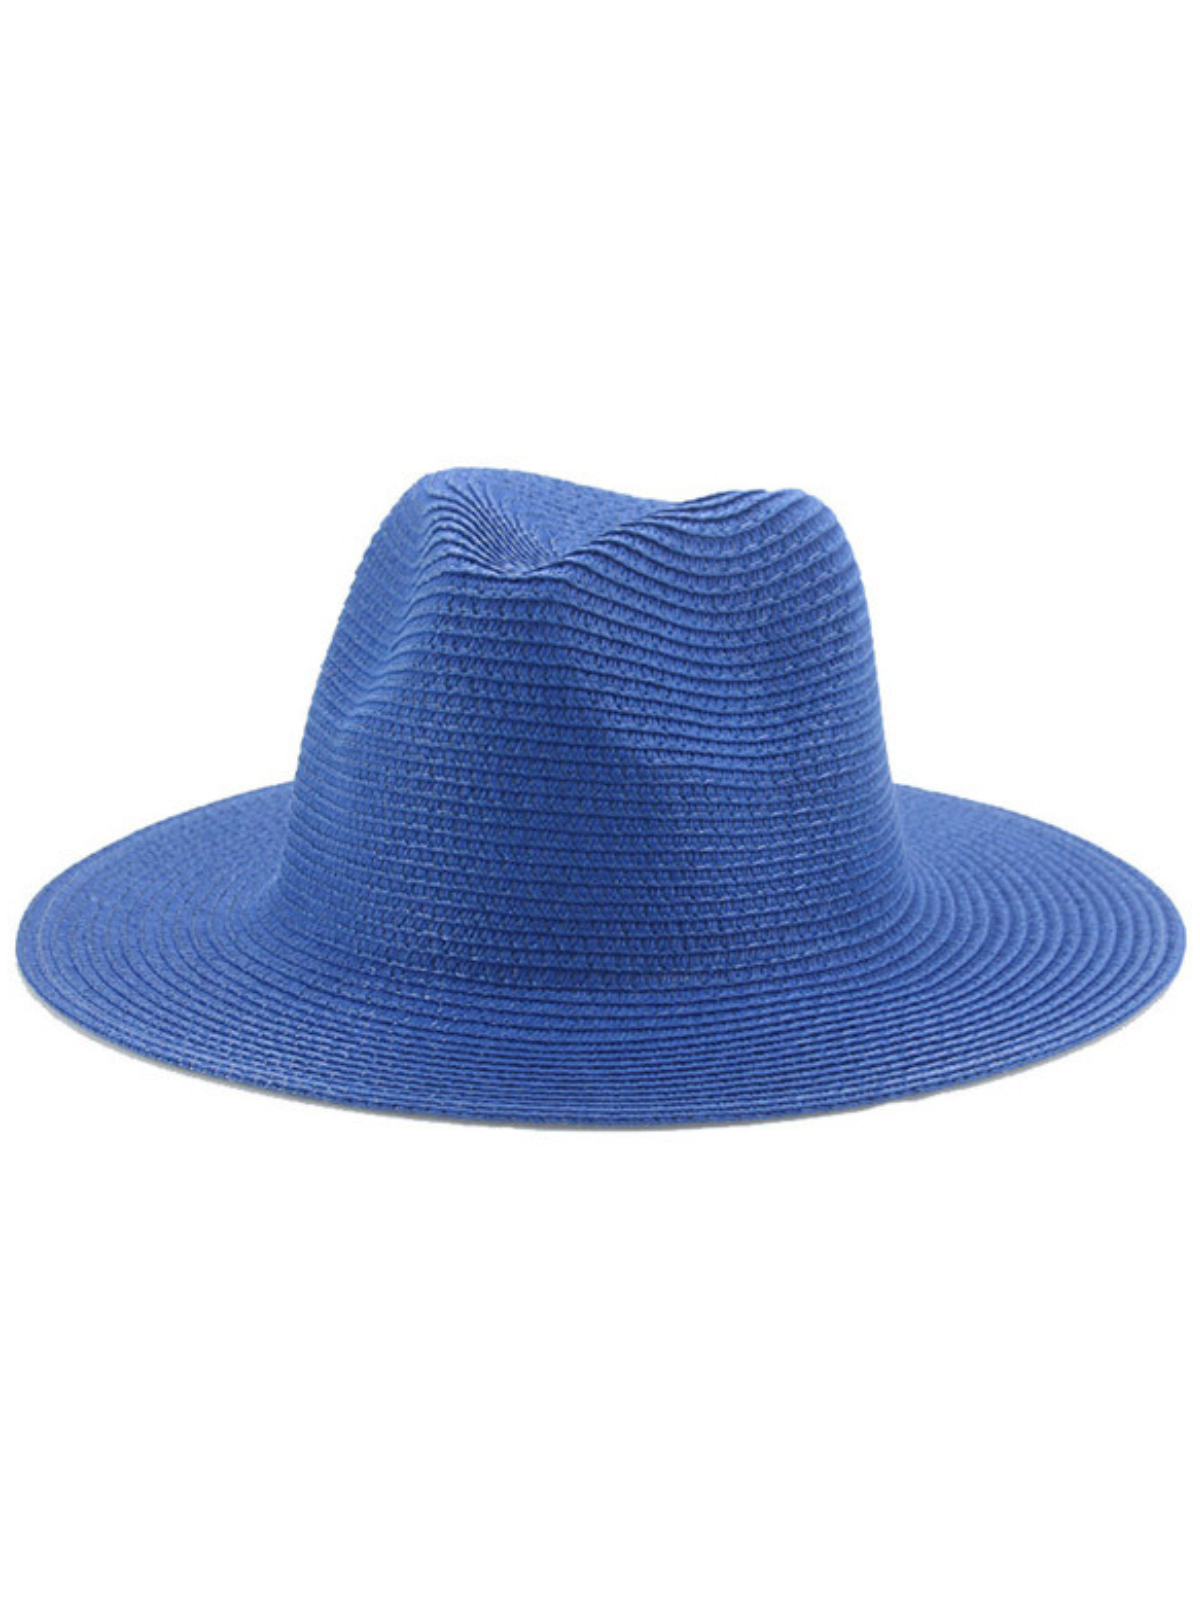 Not Your Basic Blue Sun Hat